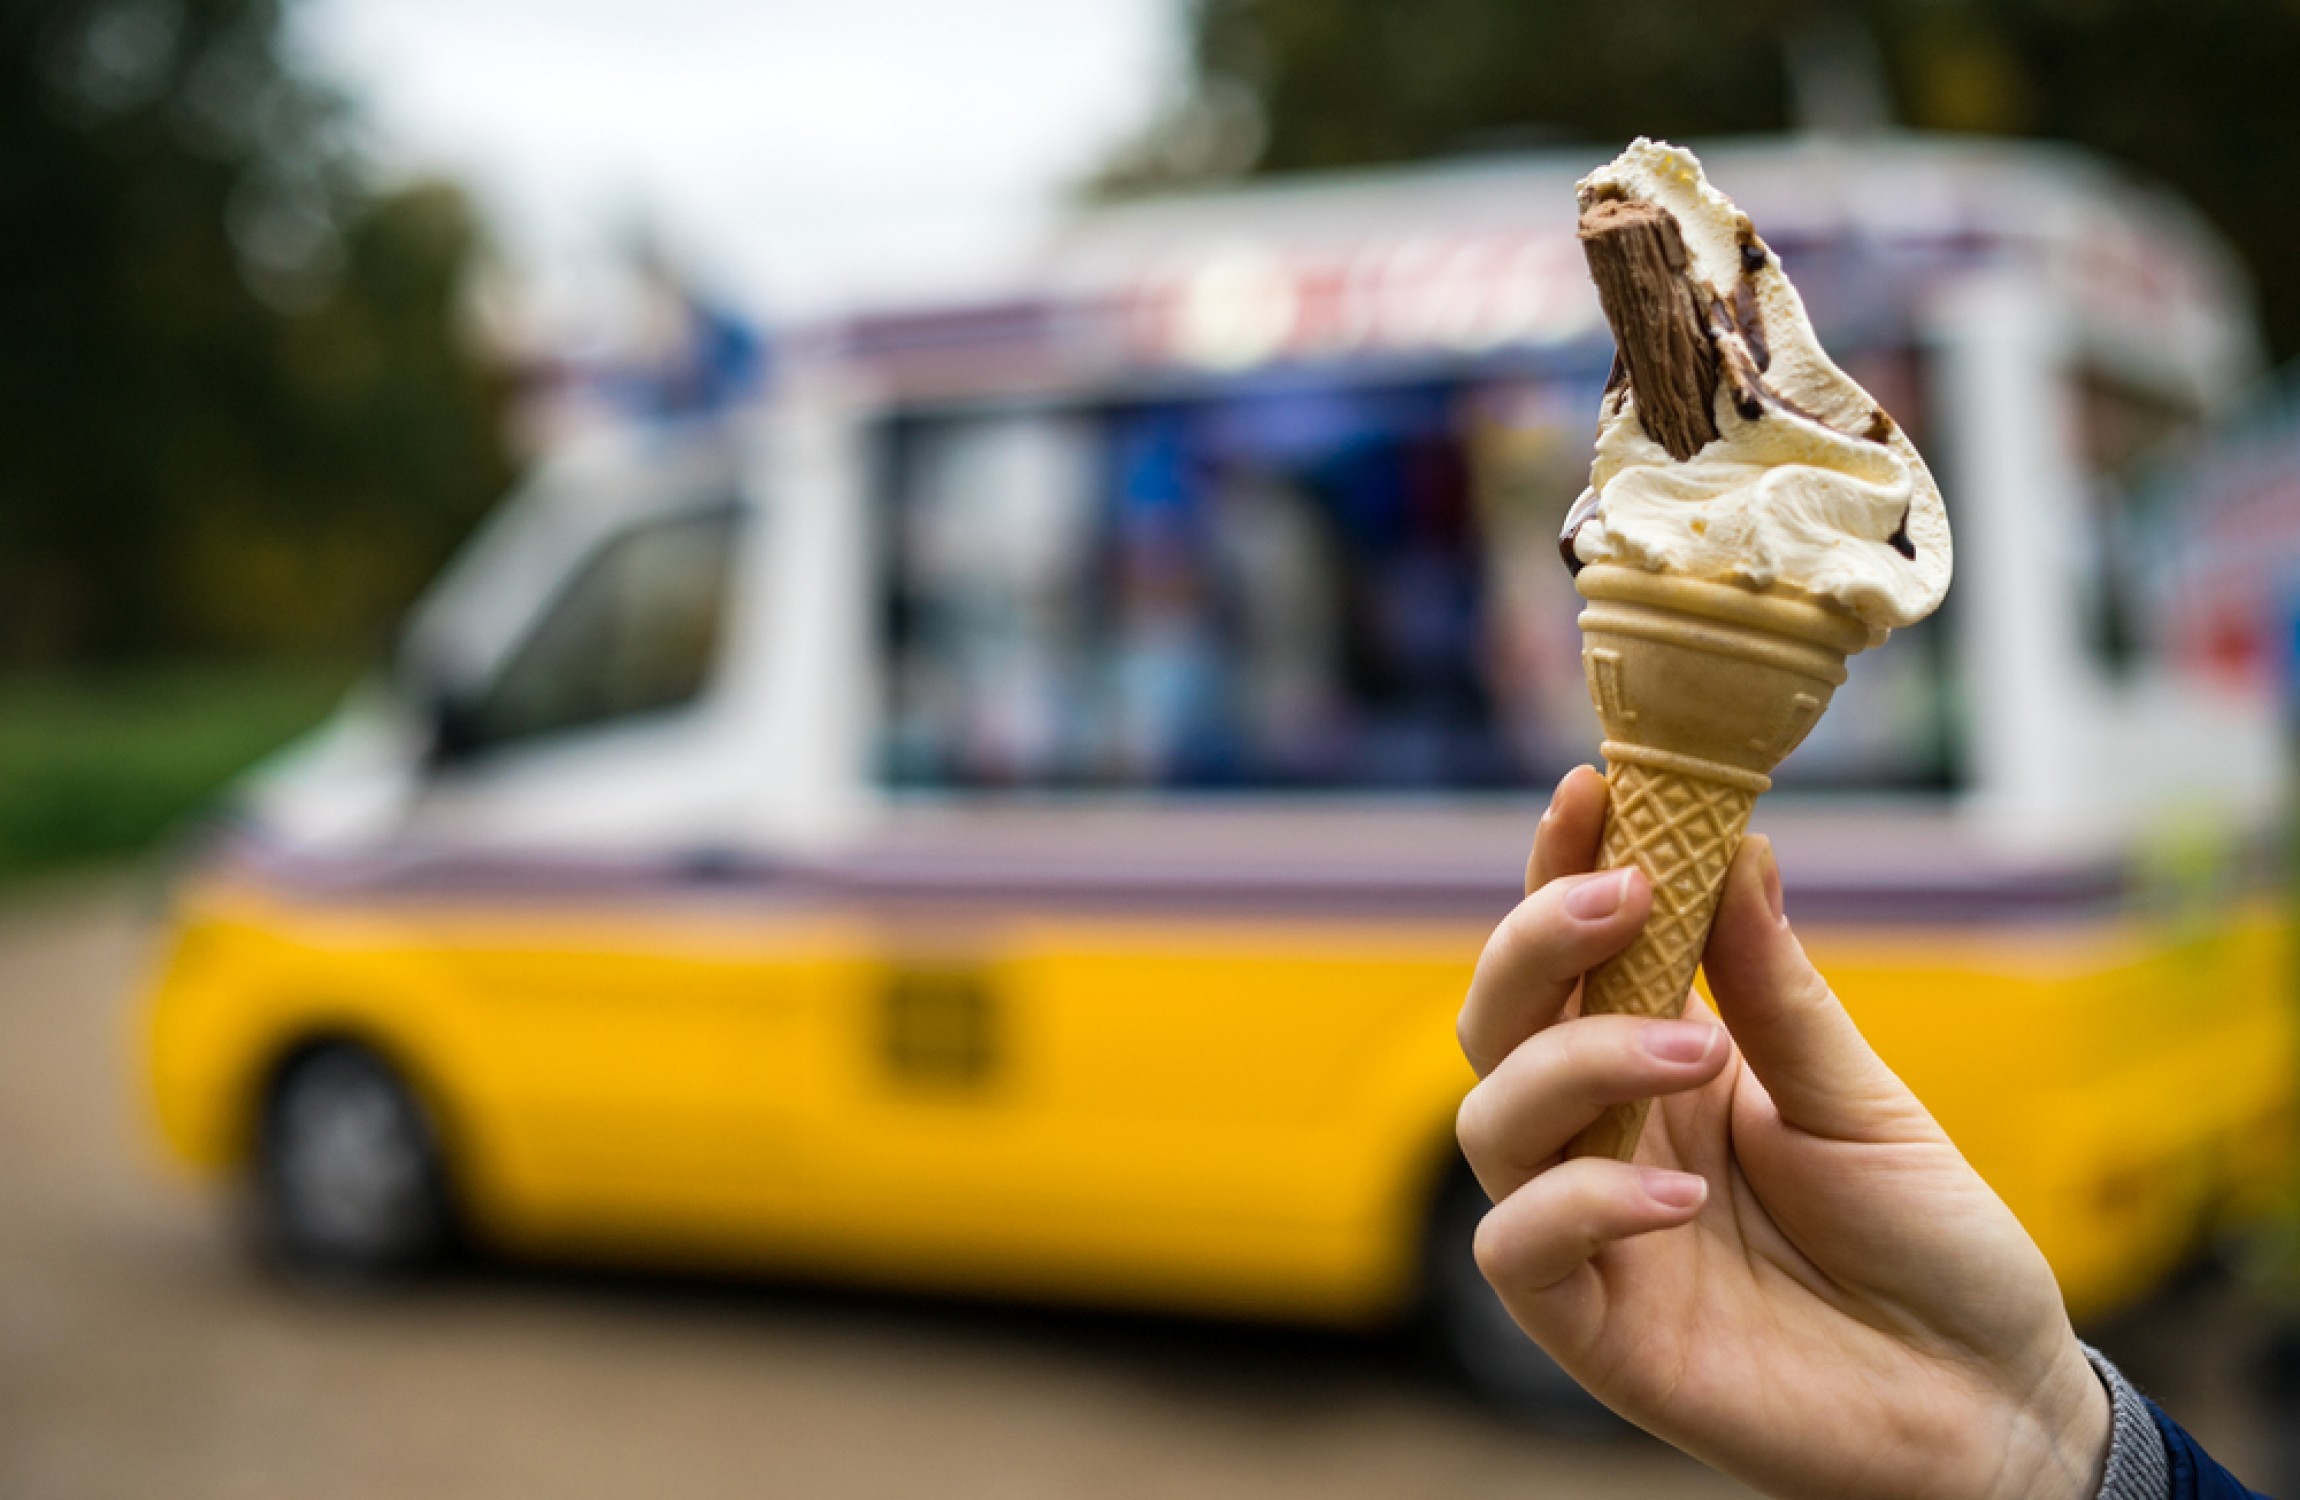 used ice cream vans